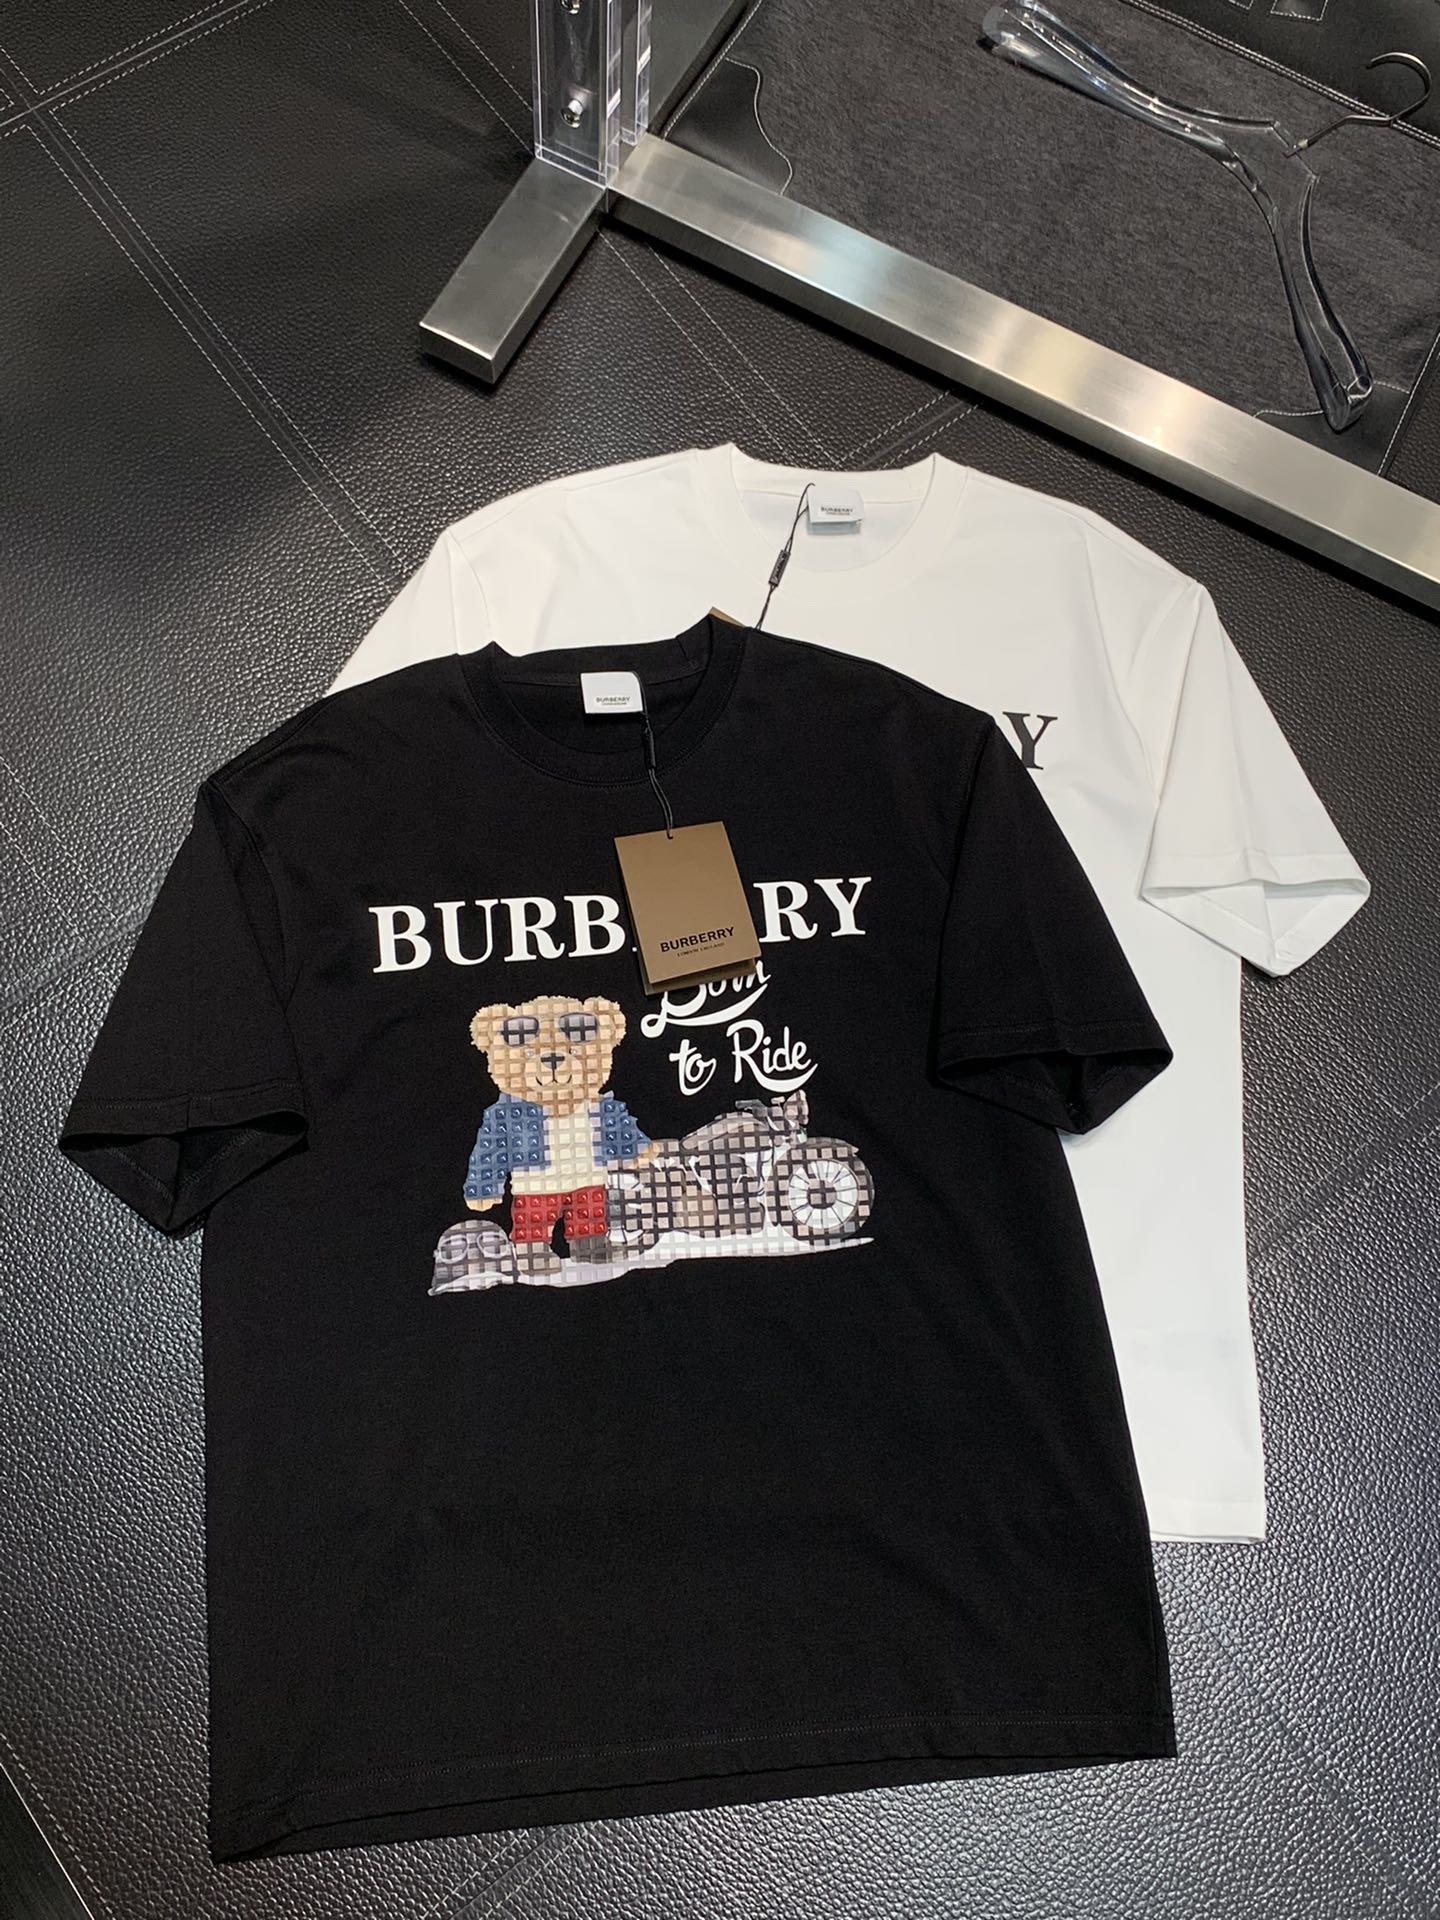 Burberry Clothing T-Shirt Men Fashion Short Sleeve